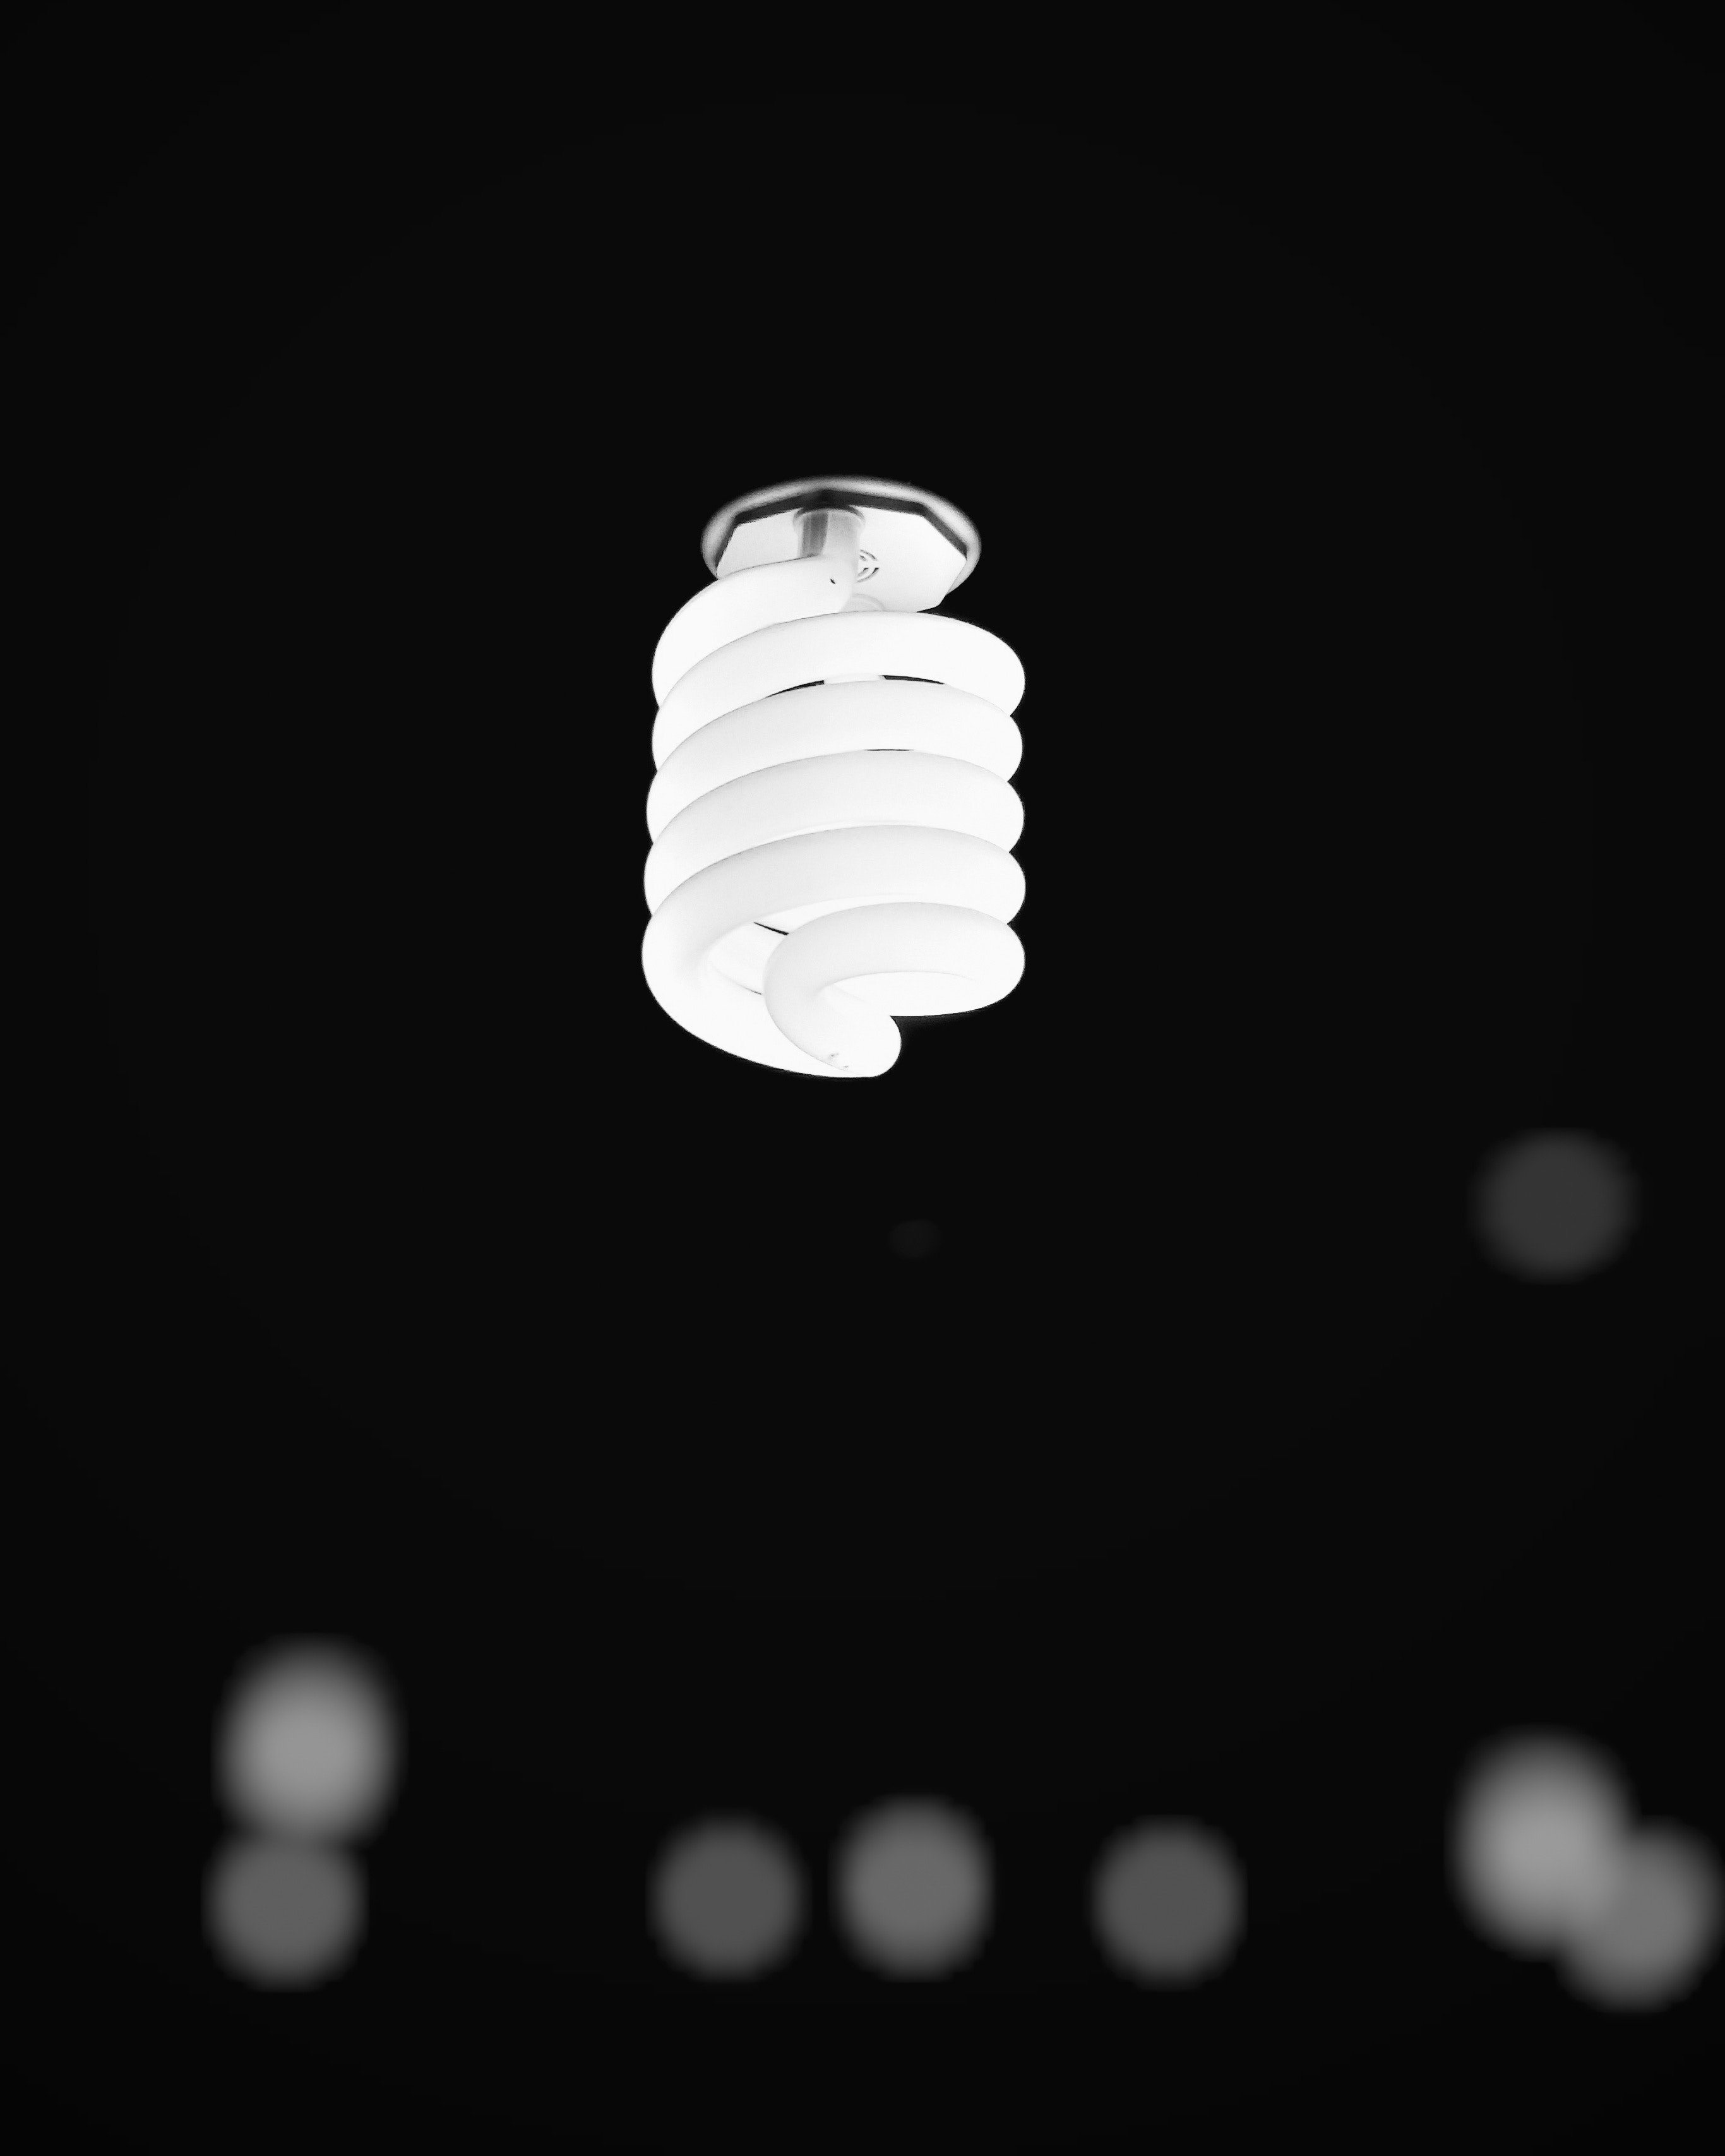 light bulb, electricity, black, illumination, bw, chb, spiral, lighting cell phone wallpapers